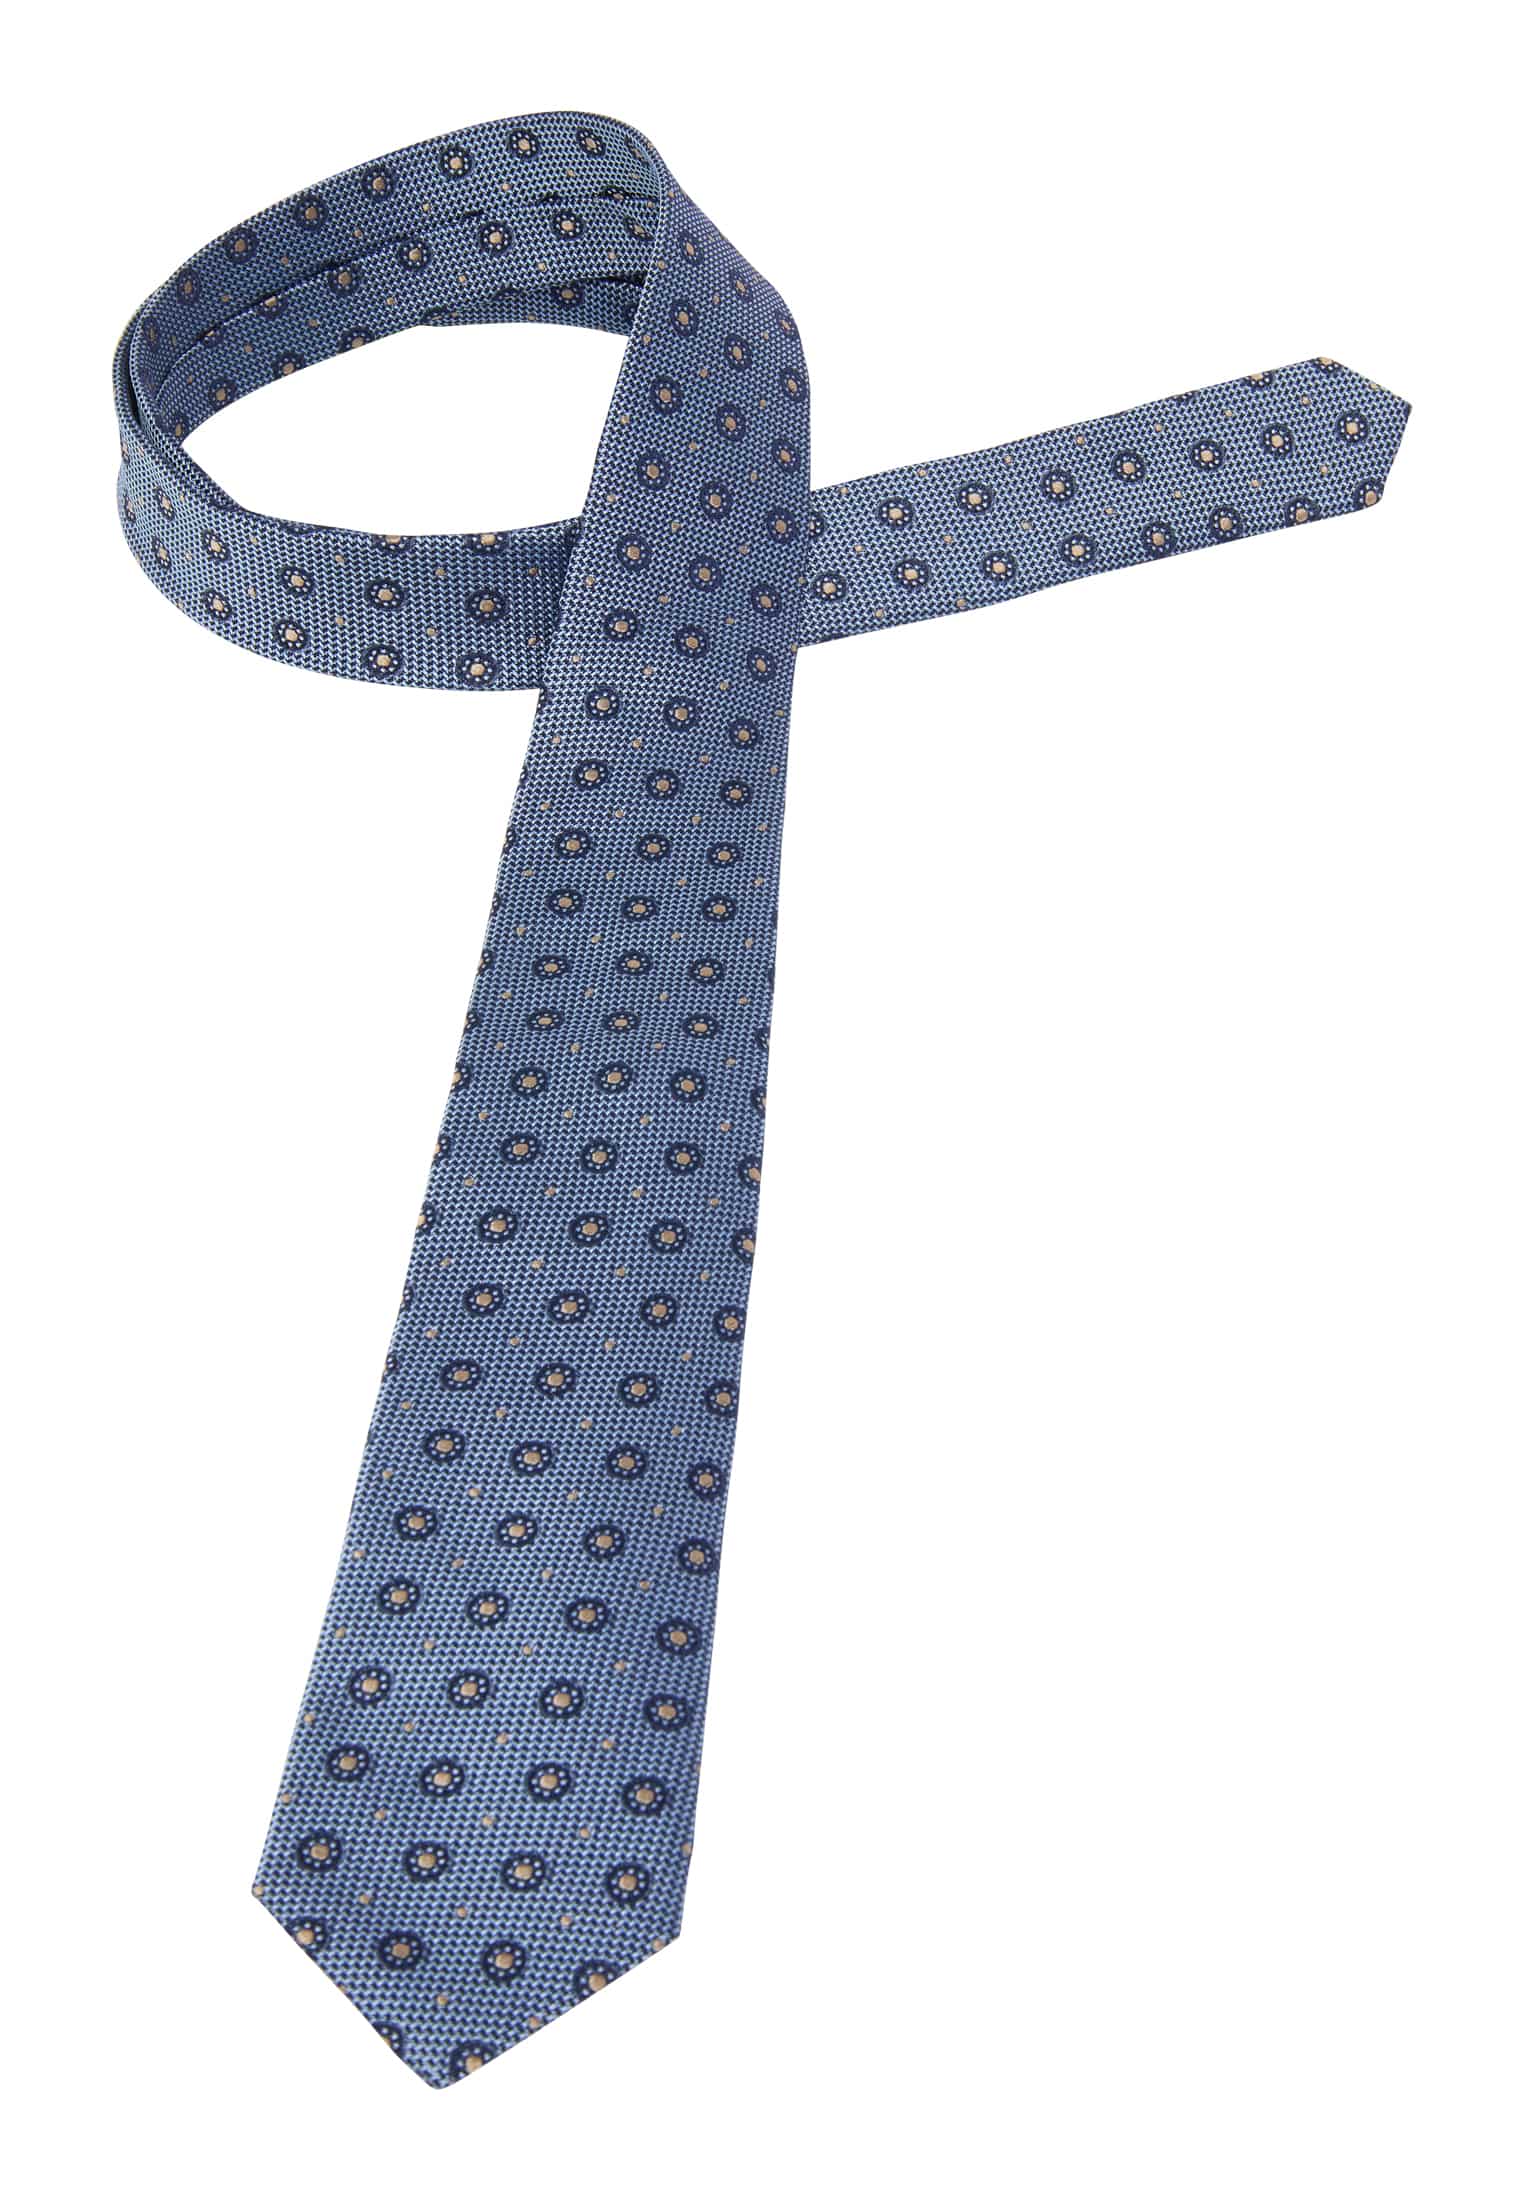 strukturiert Krawatte 1AC02041-01-41-142 | | 142 blau blau | in